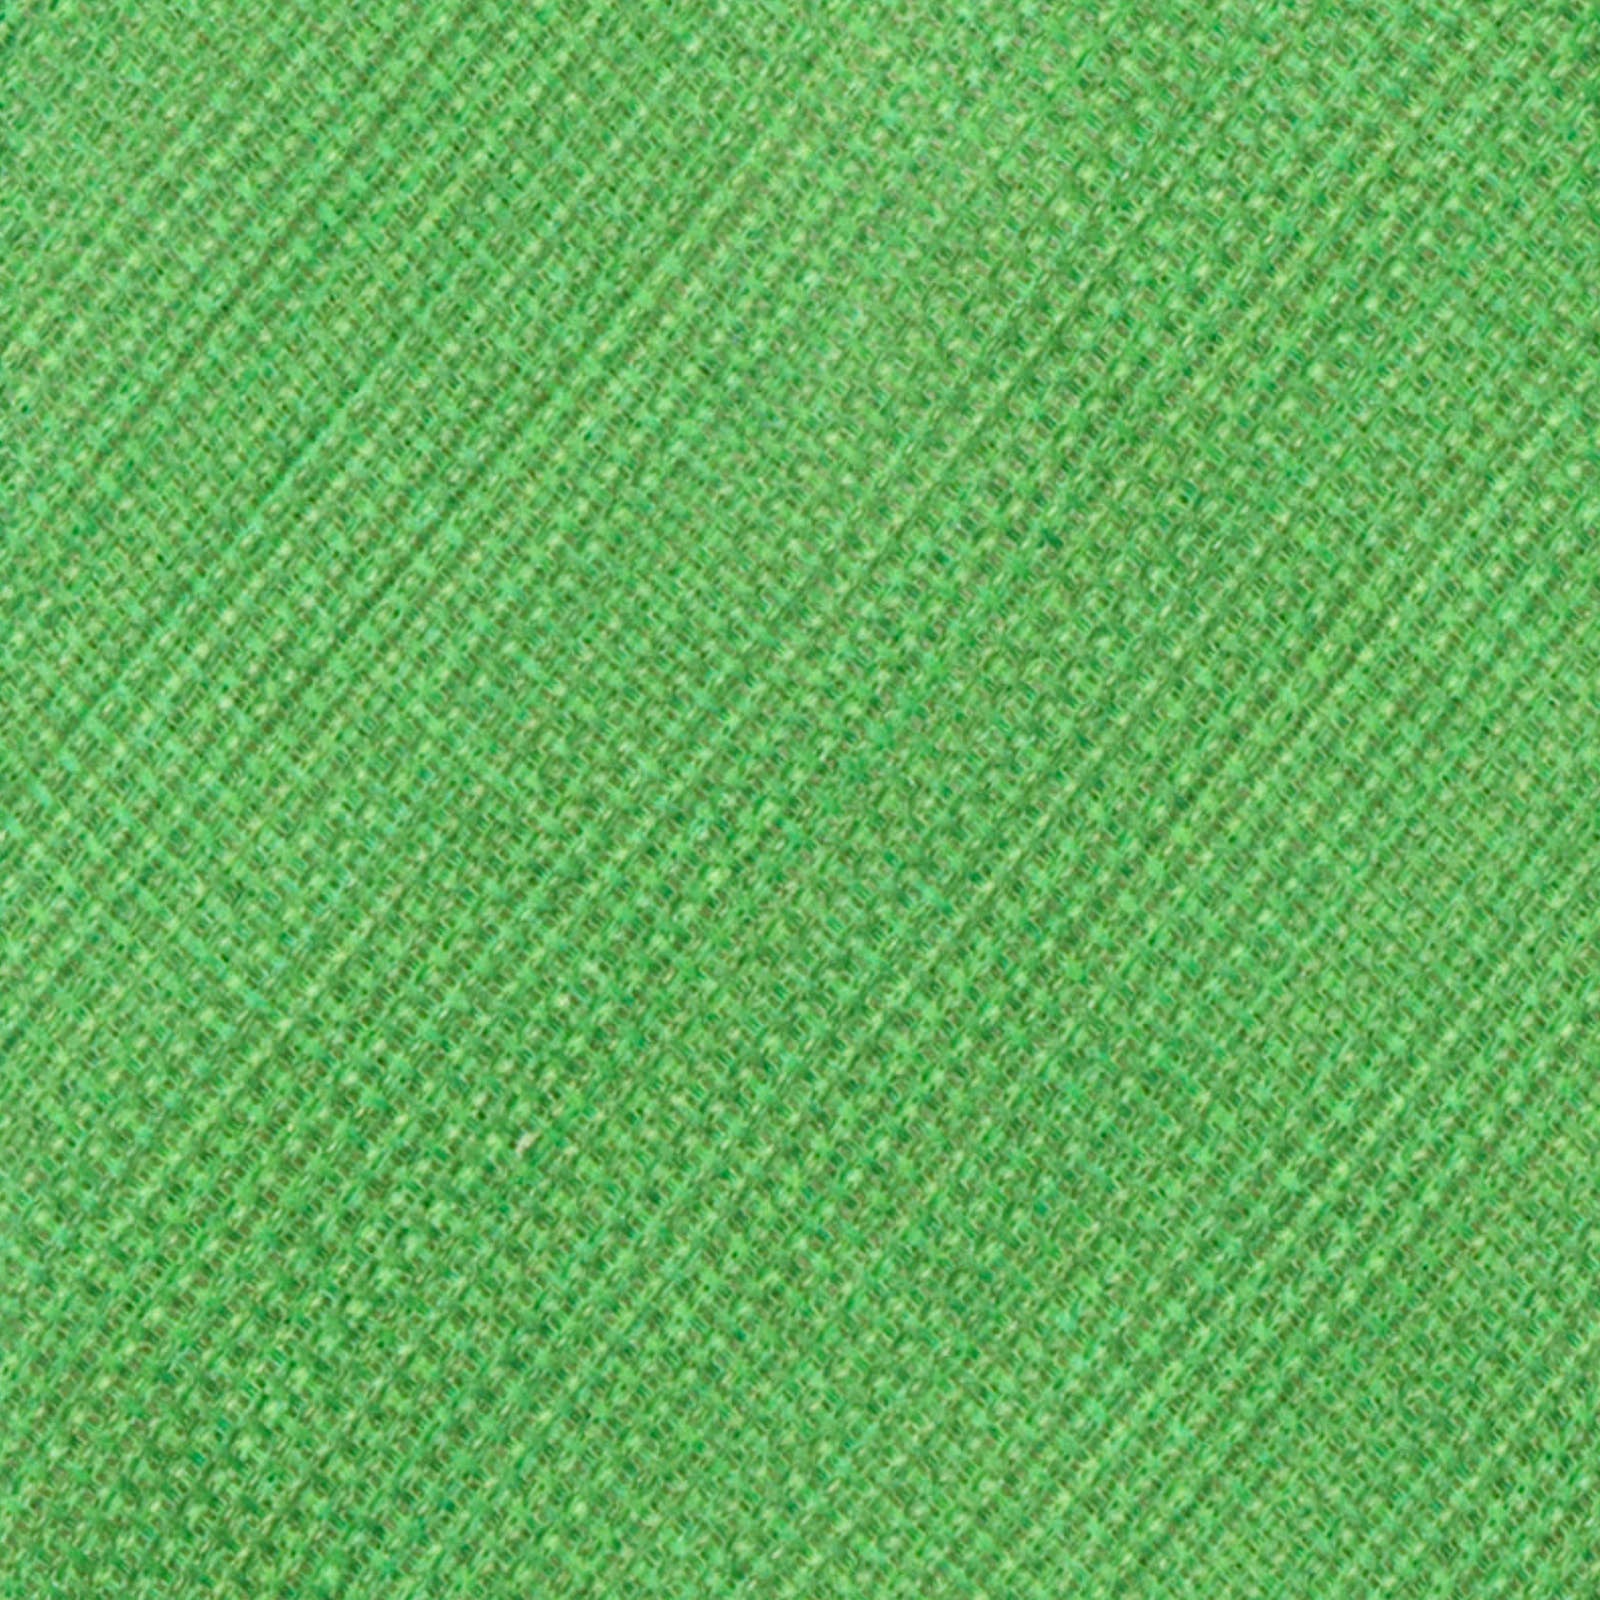 KITON Light Neon Green Seven Fold Silk-Linen Hopsack Tie NEW